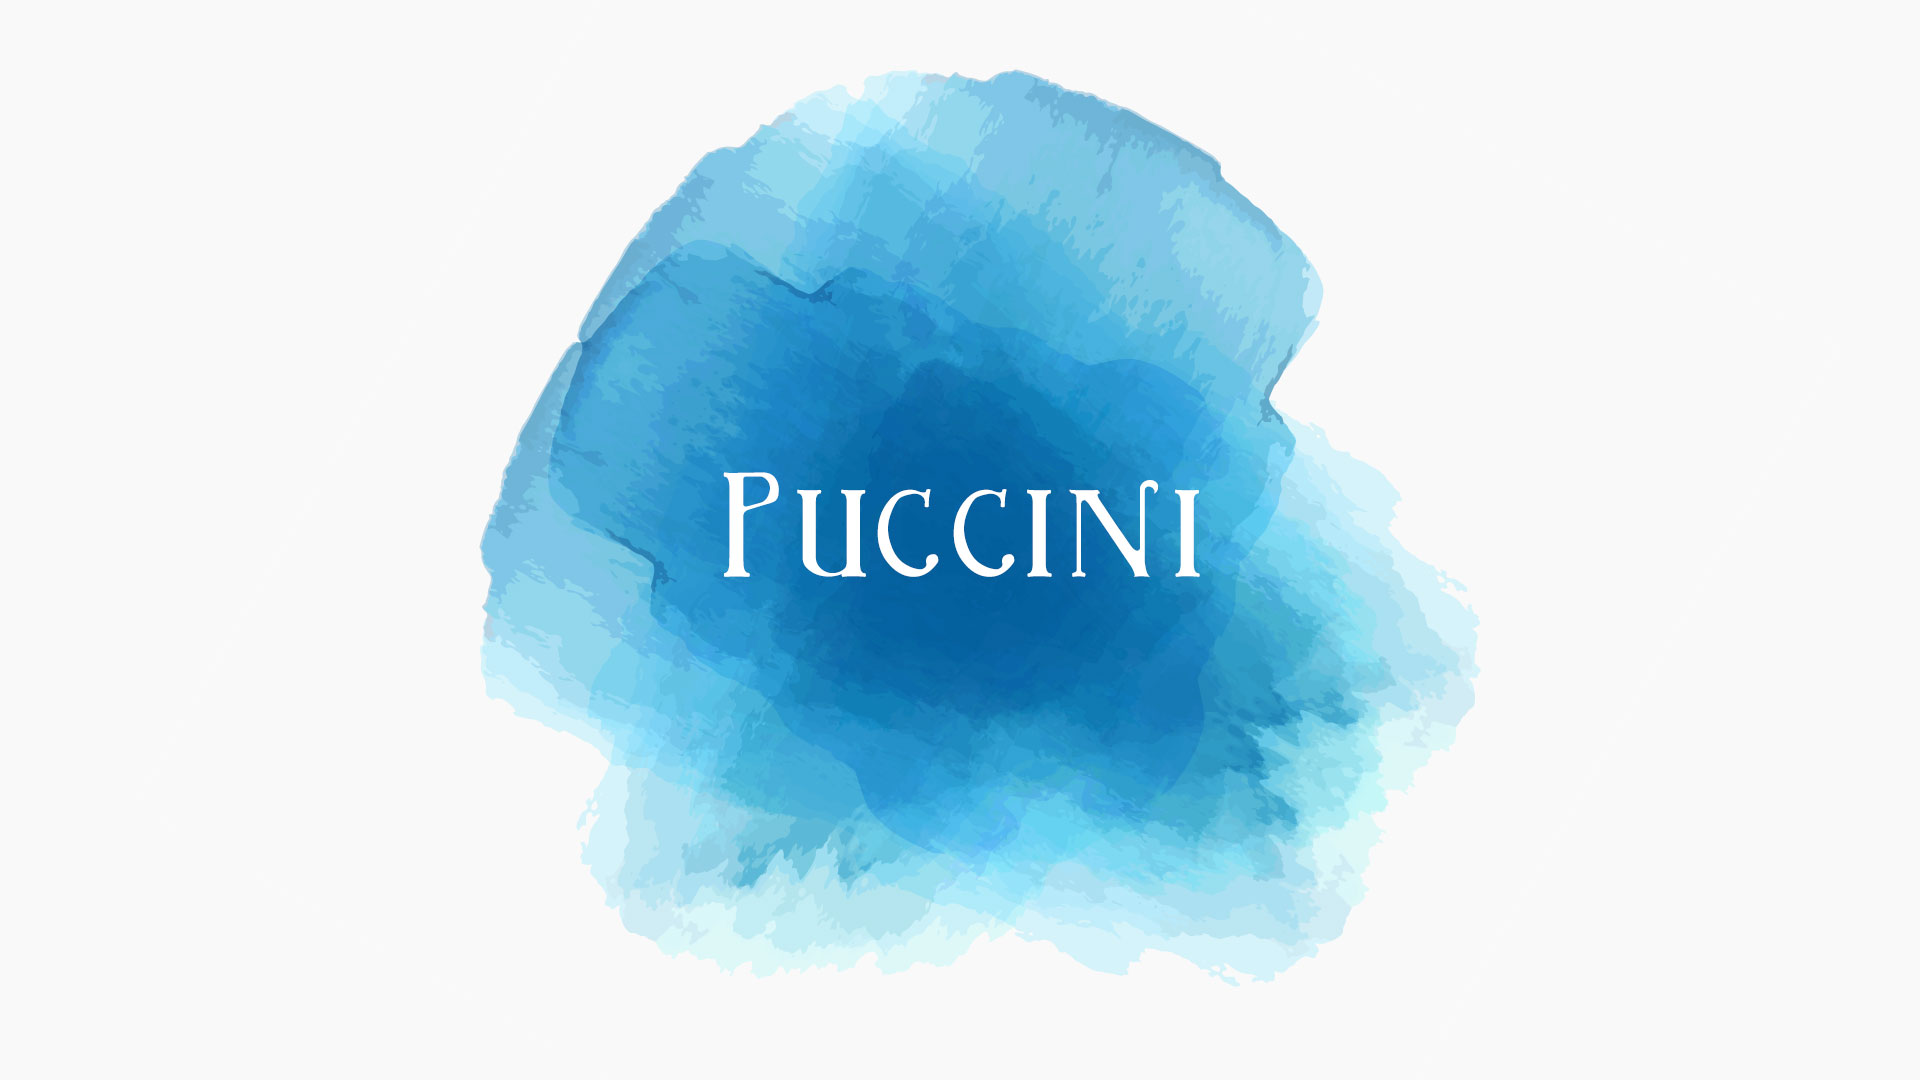 Puccinifest